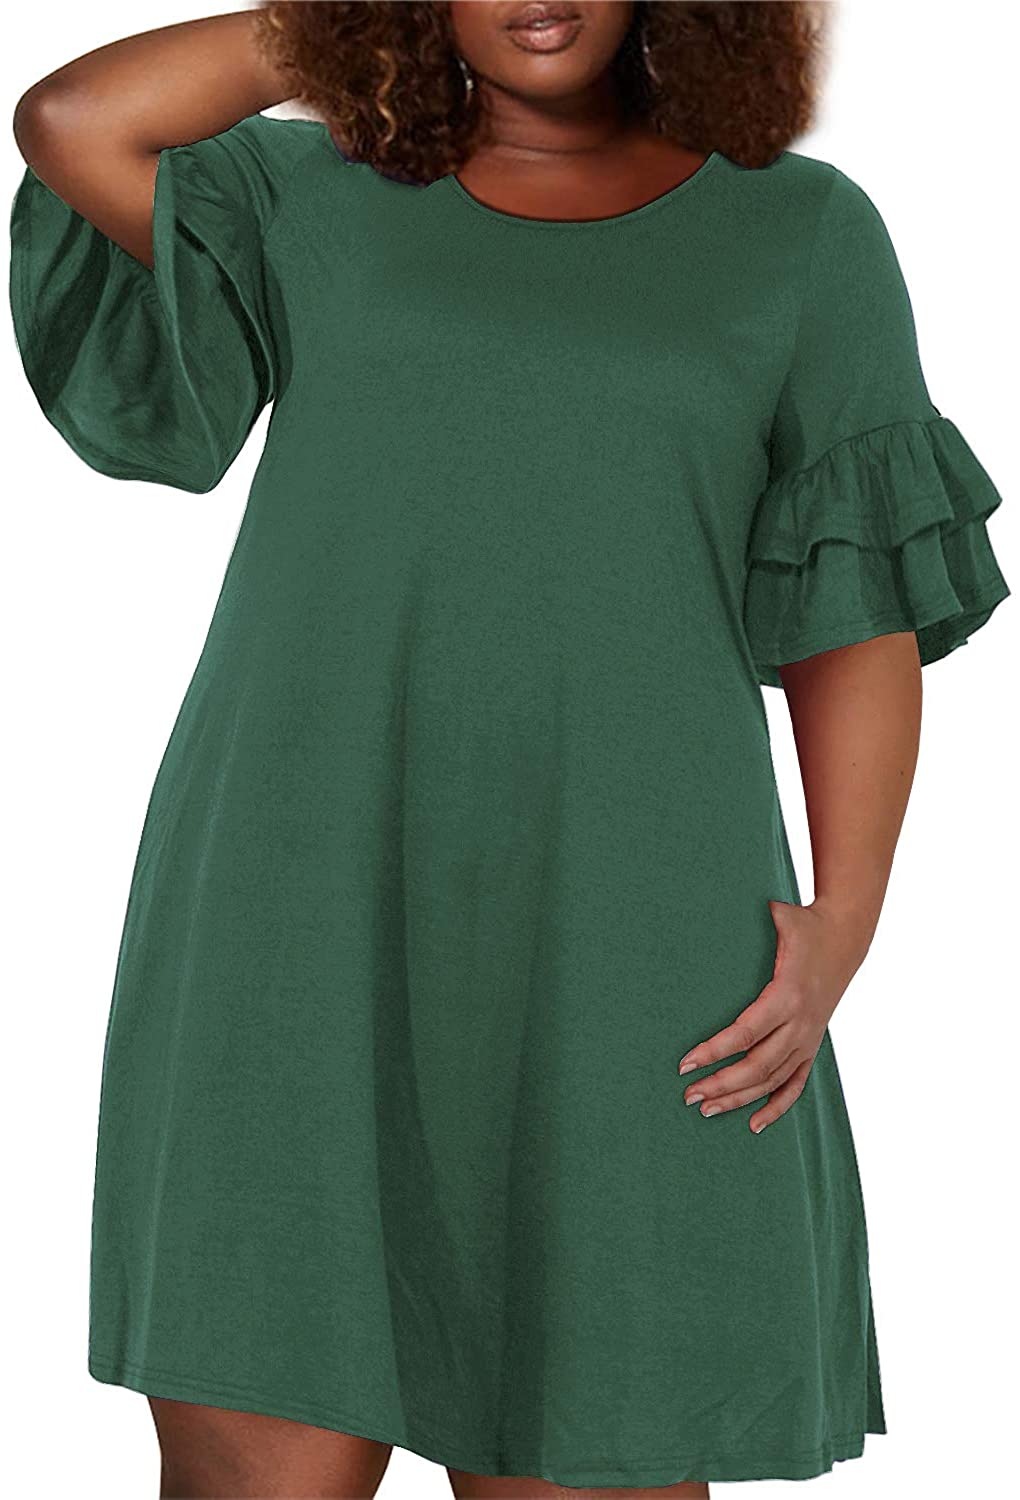 Nemidor Womens Ruffle Sleeve Jersey Knit Plus Size Casual Swing Dress with Pocket 